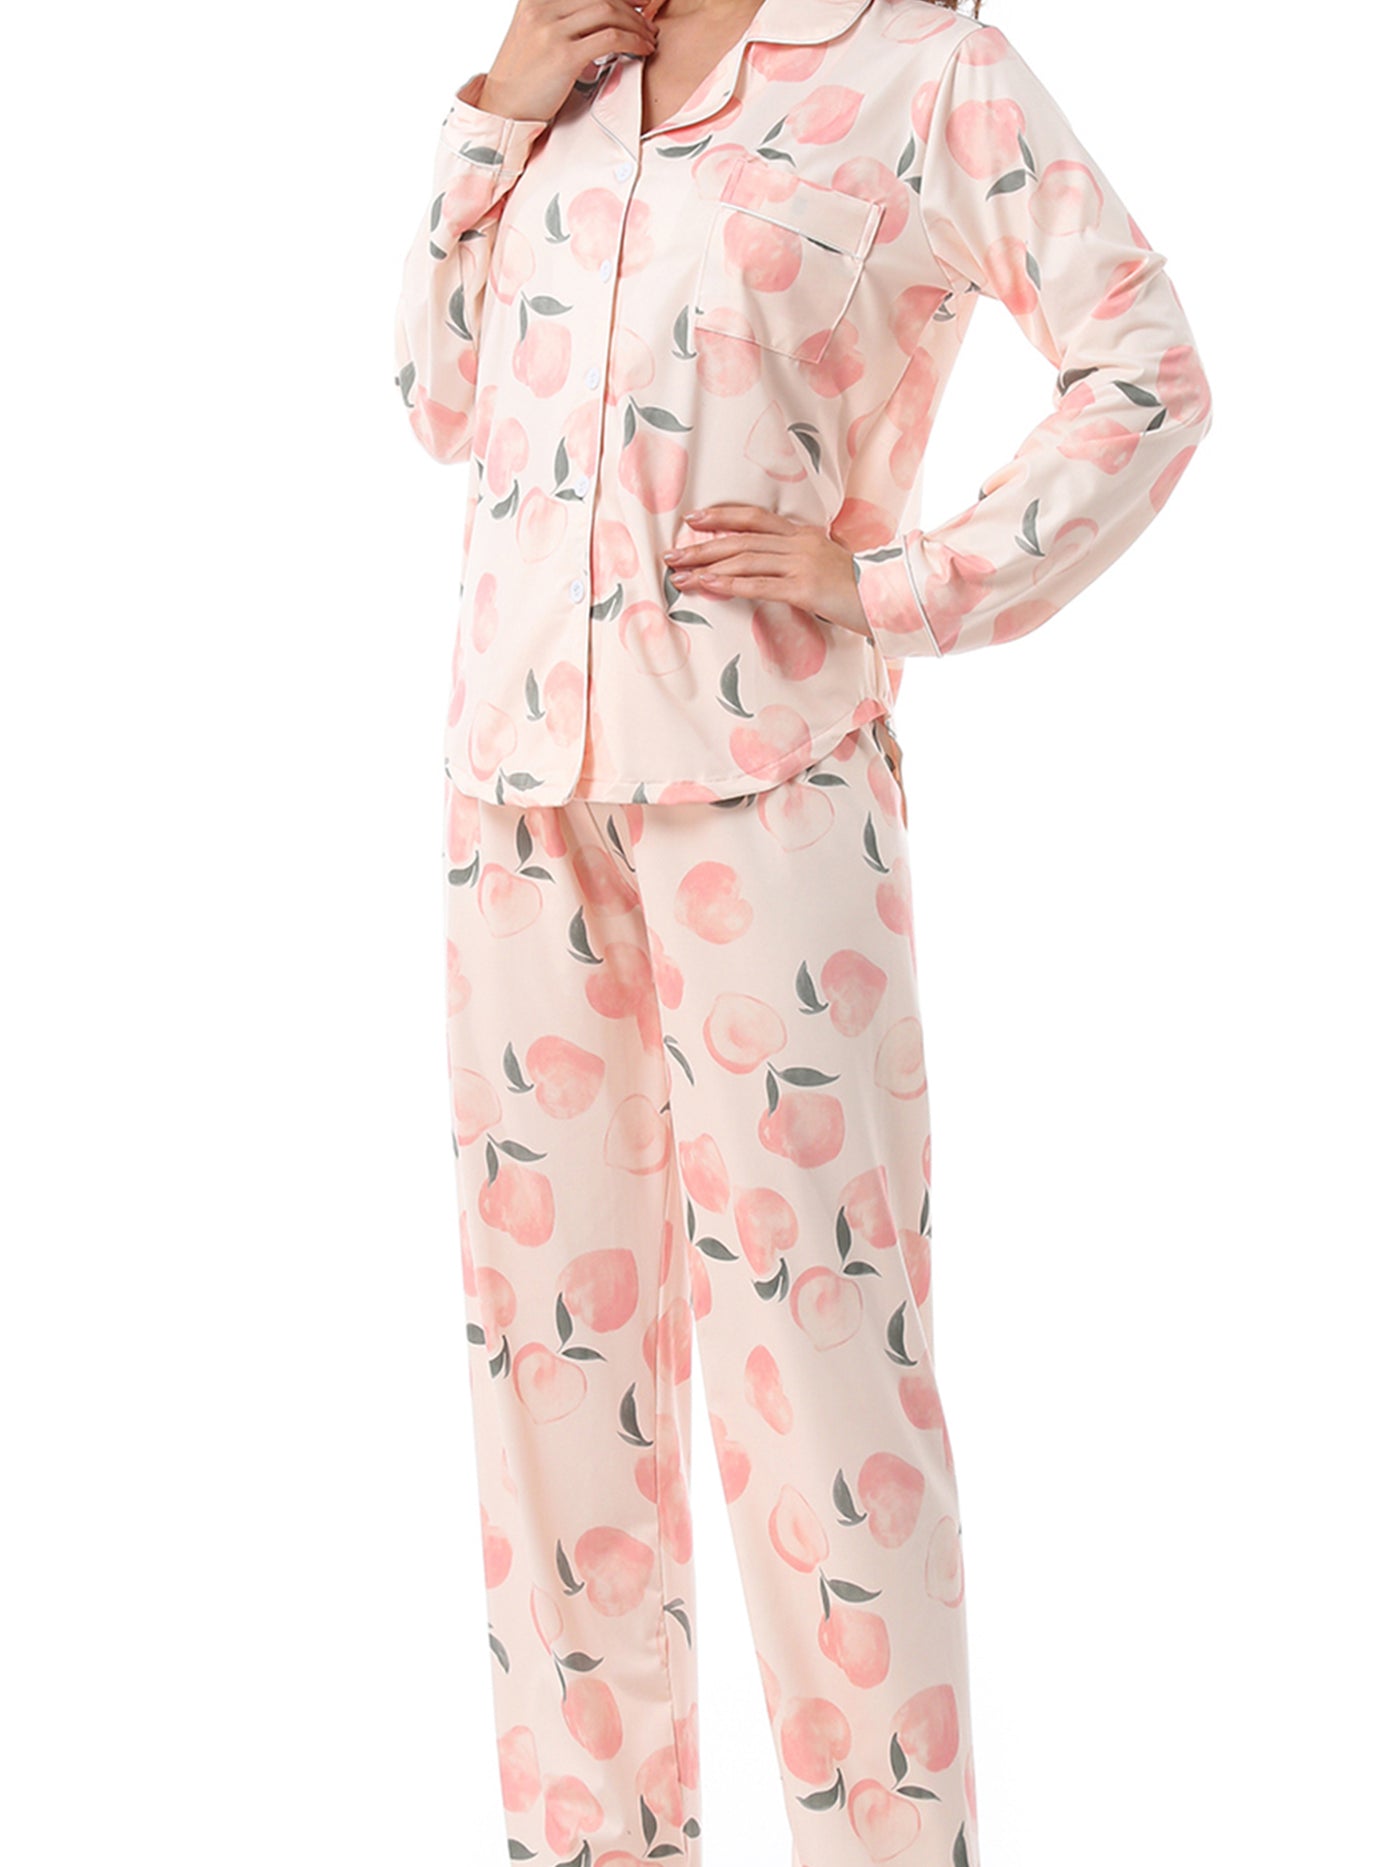 Bublédon Women's Sleepwear Cute Soft Long Sleeve Pajama Set